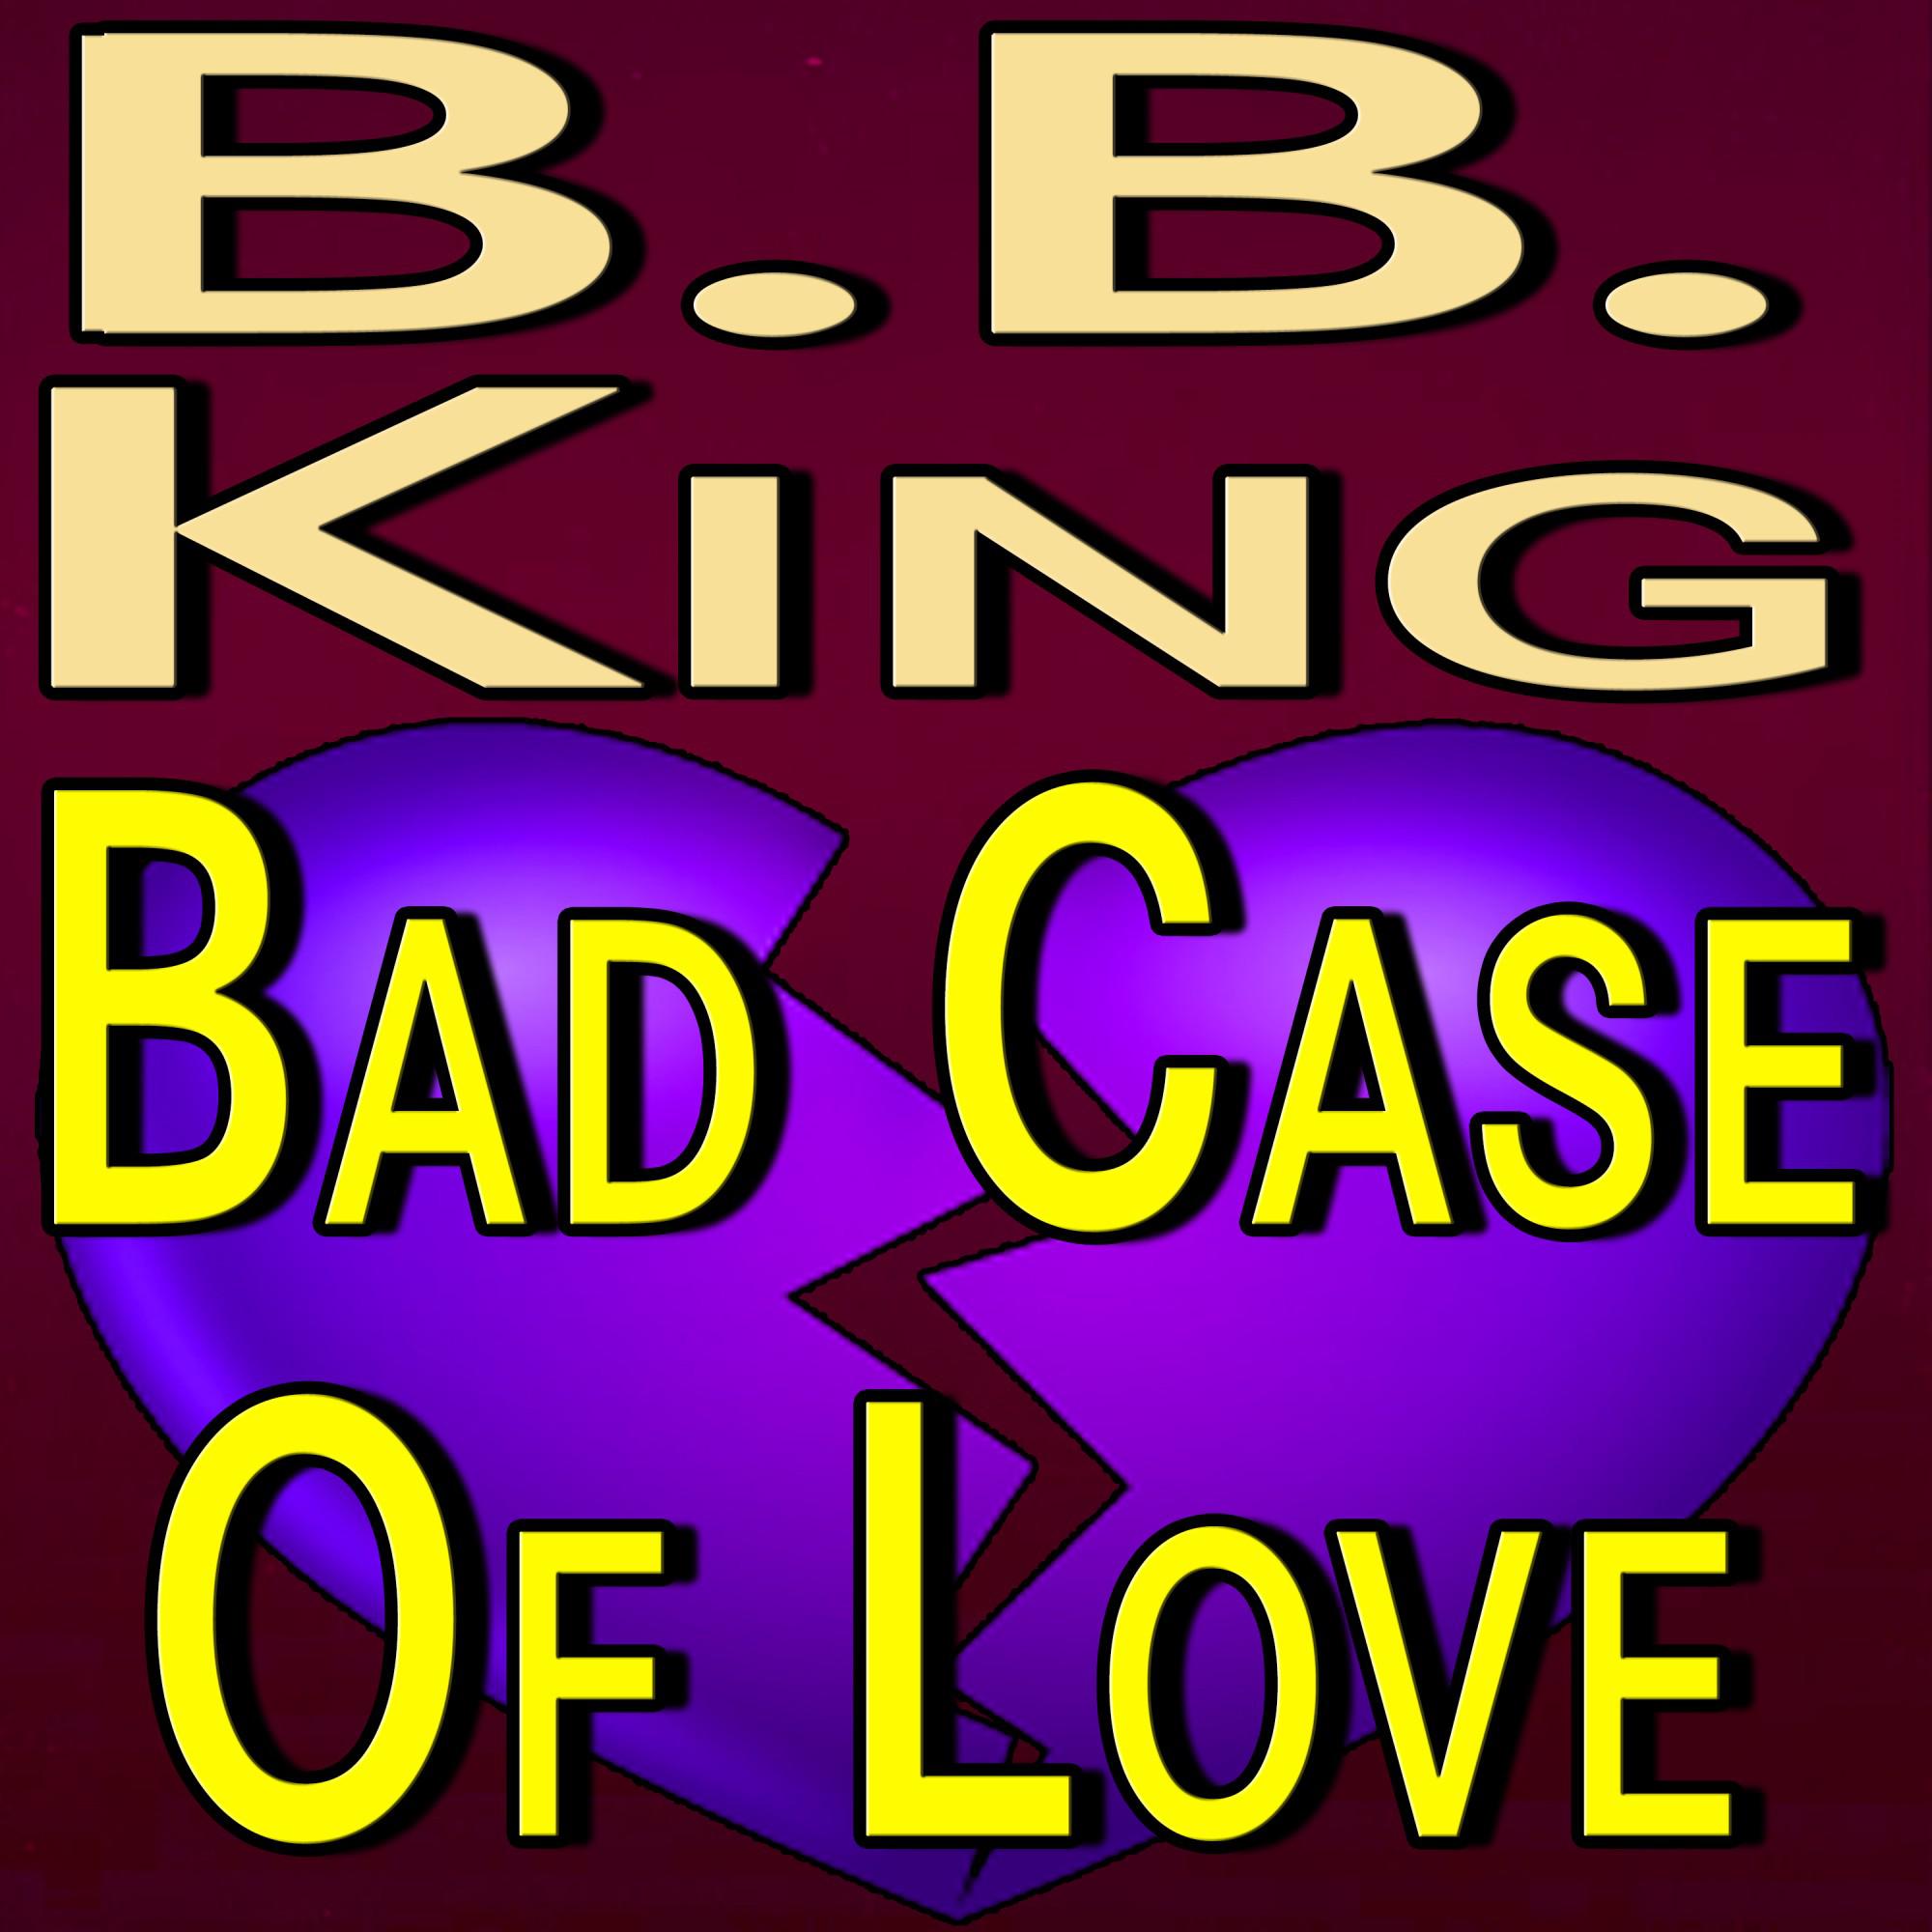 B.B. King Bad Case Of Love